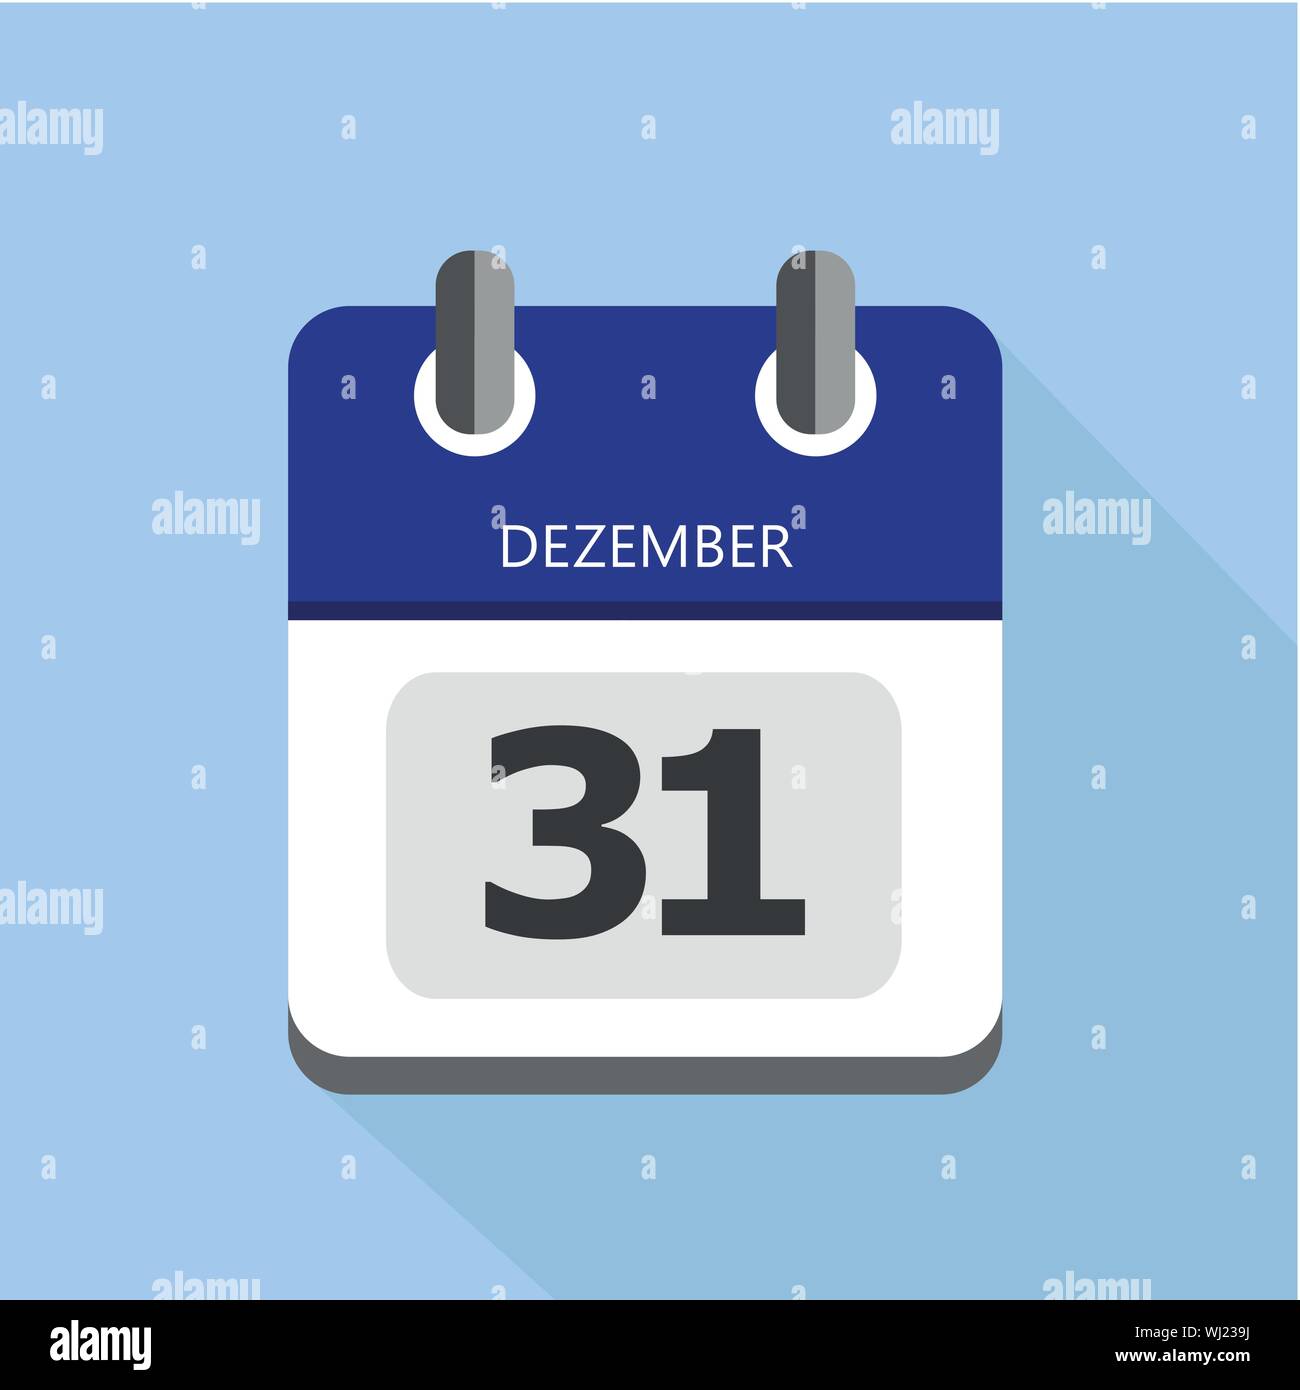 calendar 31 december on blue background vector illustration EPS10 Stock Vector